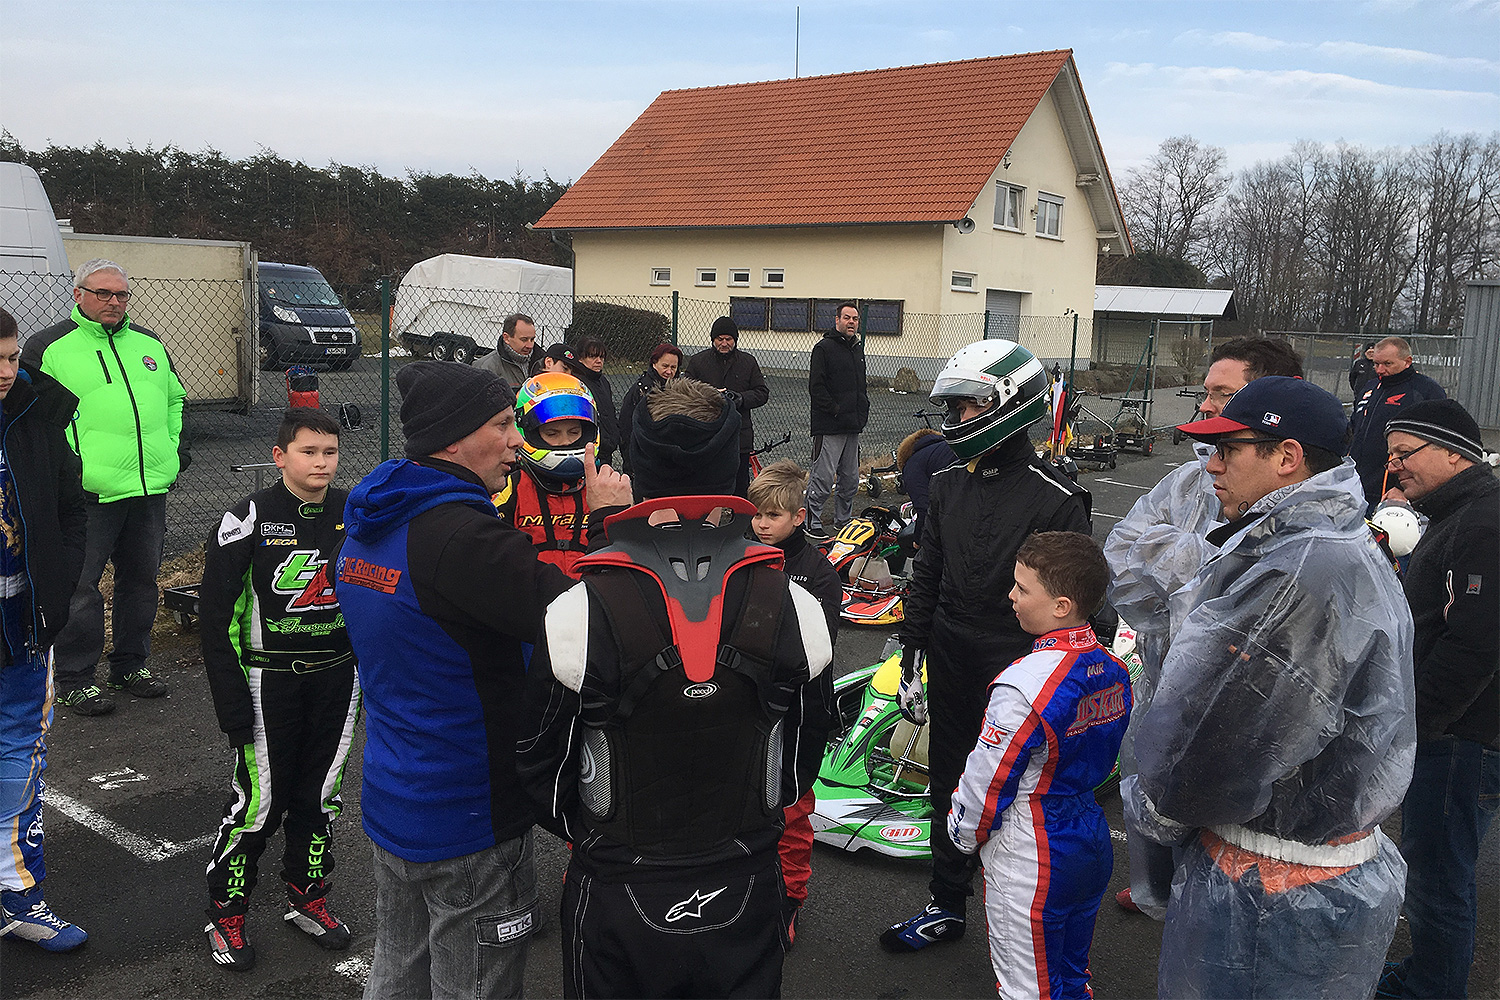 DMSB Kart-Lizenzlehrgang und Kart-Technik Kurs in Wittgenborn